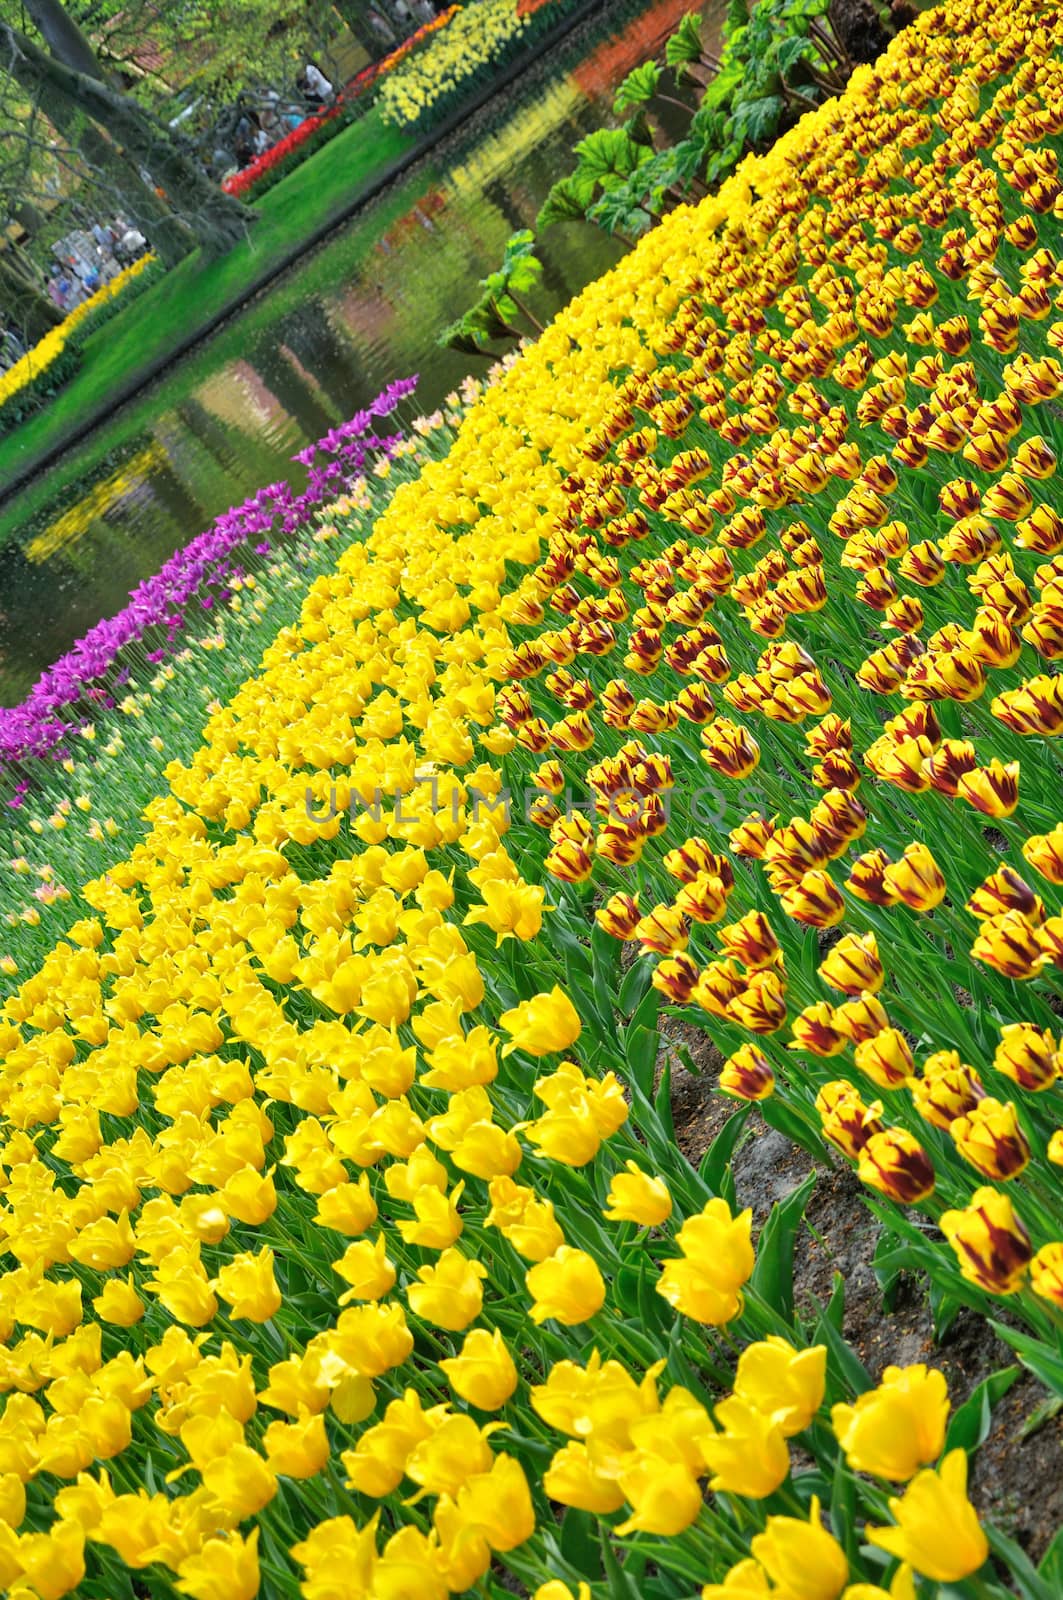 Yellow and purple tulips in Keukenhof park in Holland